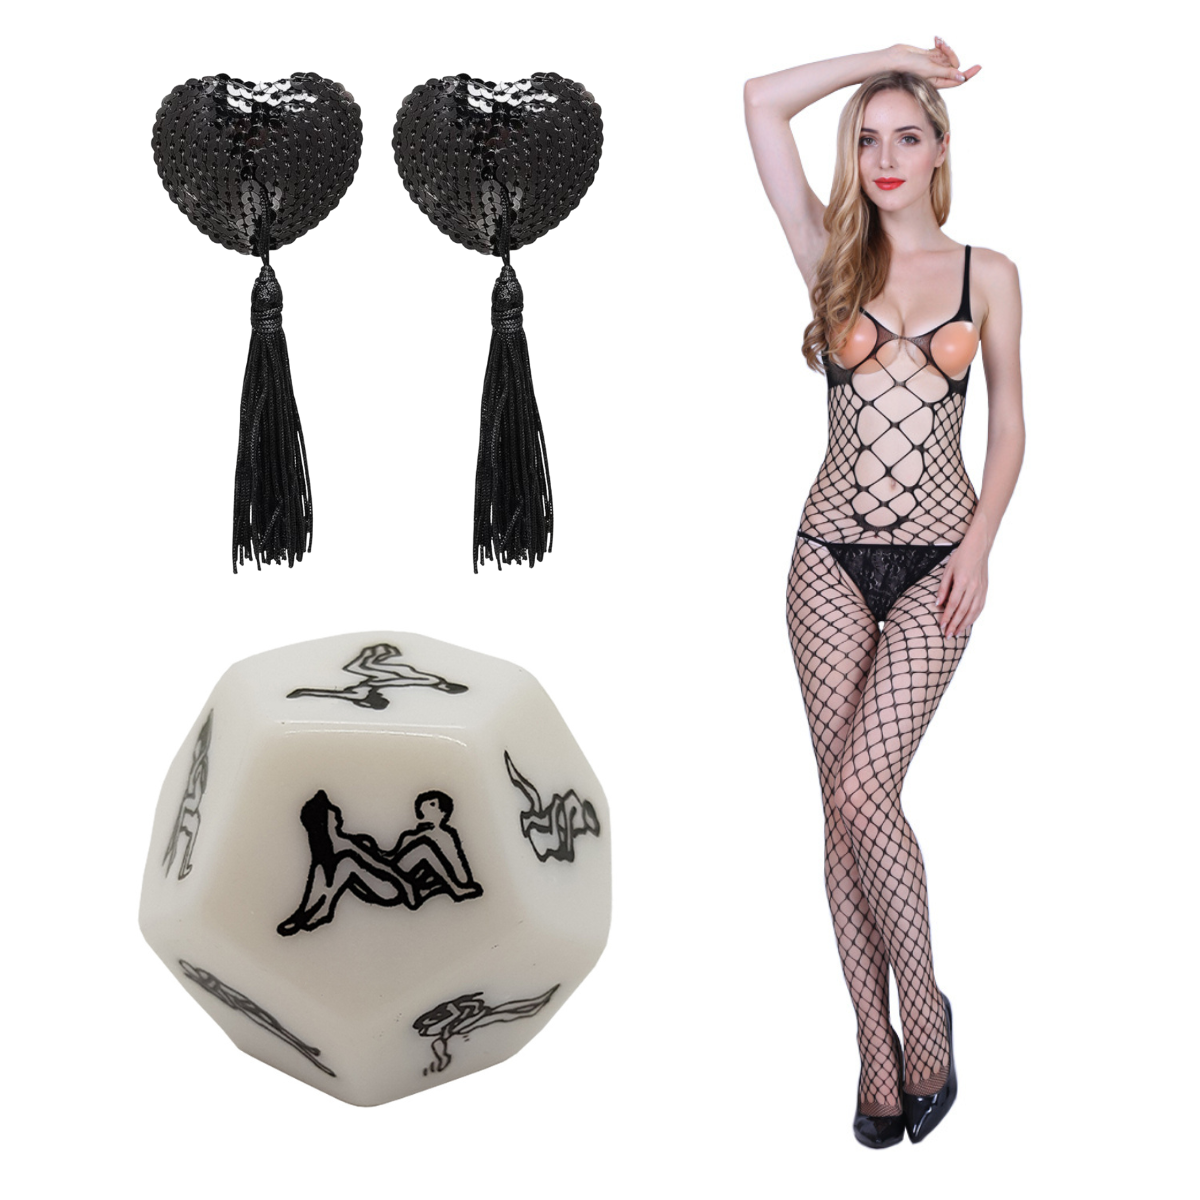 30pcs - Kamasutra Sex Dice, Black Heart-shaped Nipple Tassels And Sexy Fish Net Open Boob Bodystocking Set (Total 10 Sets)|GCAPSET032 (GCL042096AP033)